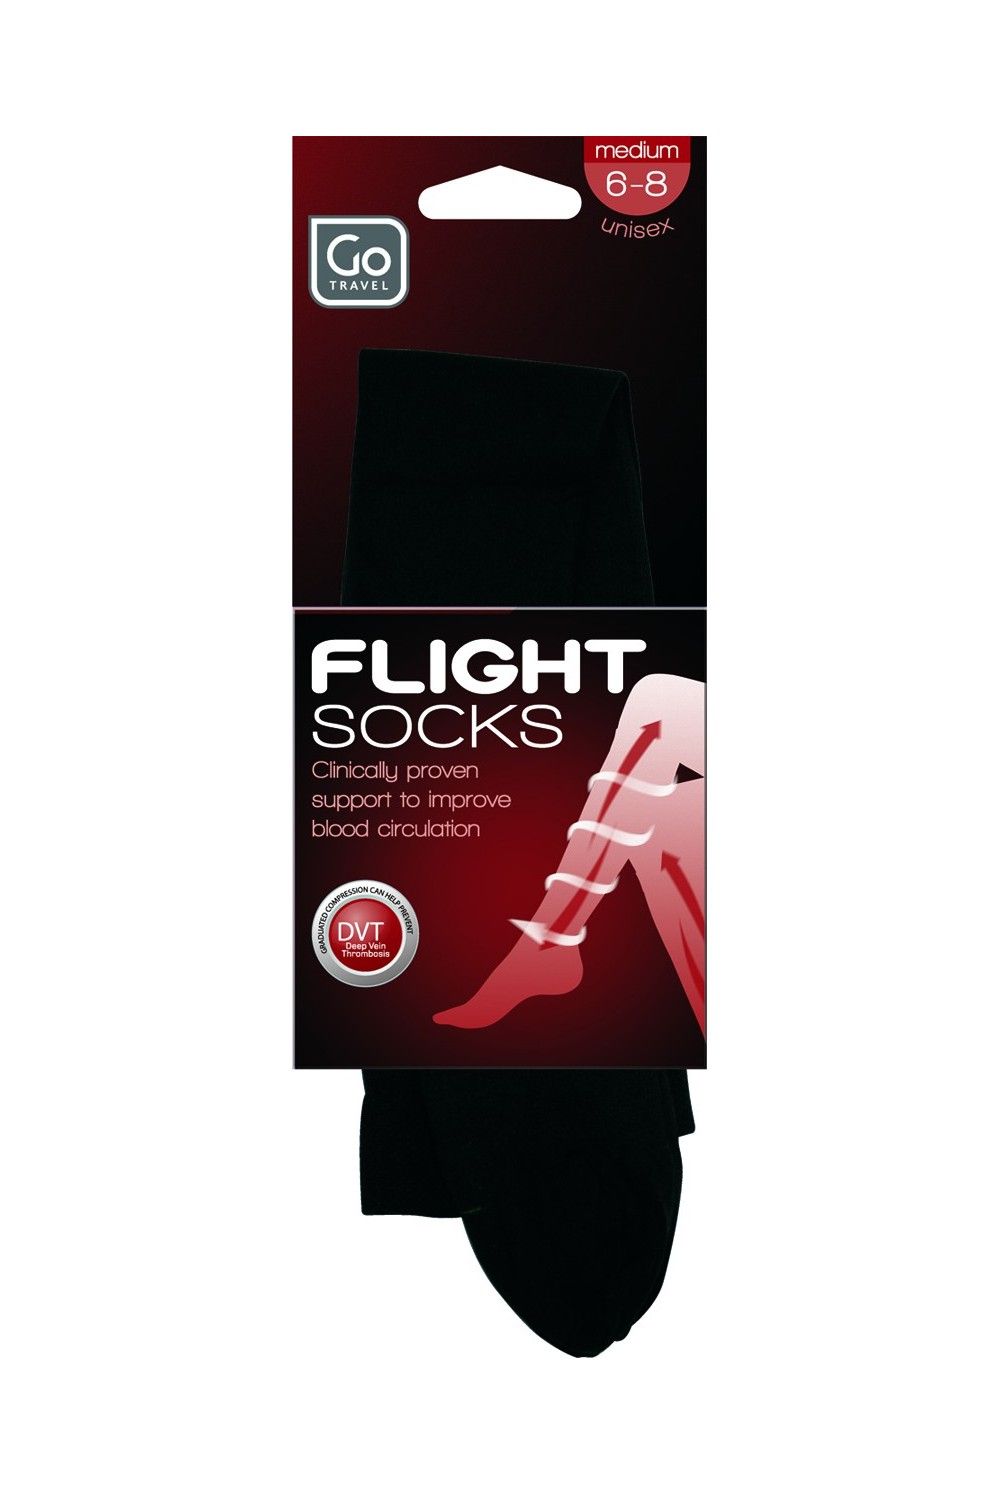 Go Travel In-Flight Socks